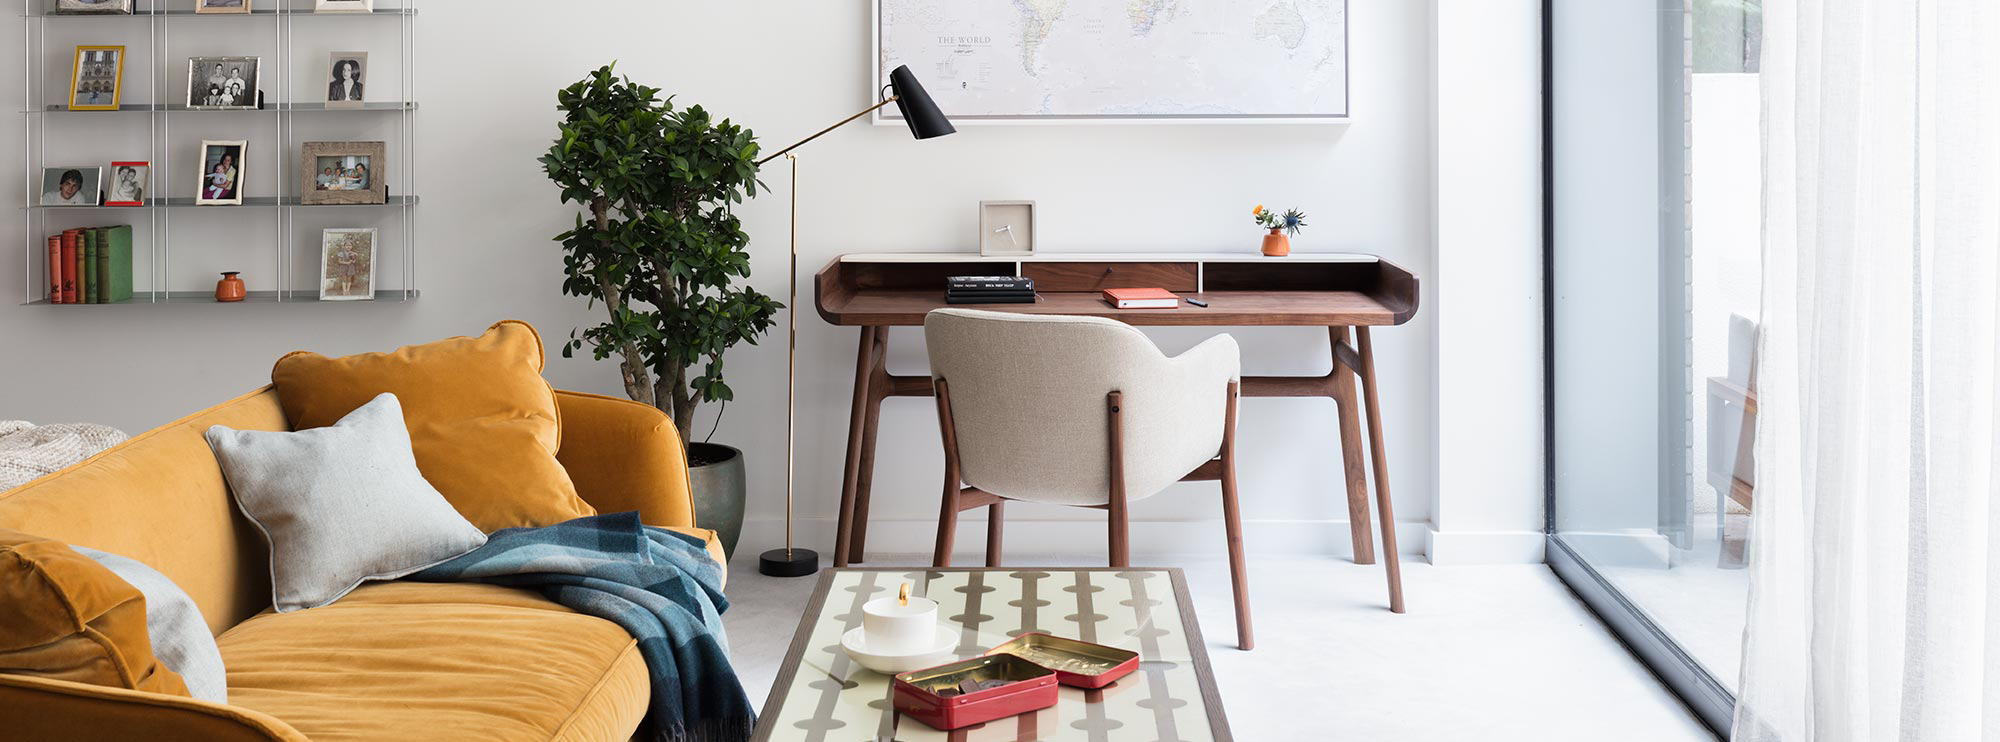 london-modern-interior-design-bedroom-home